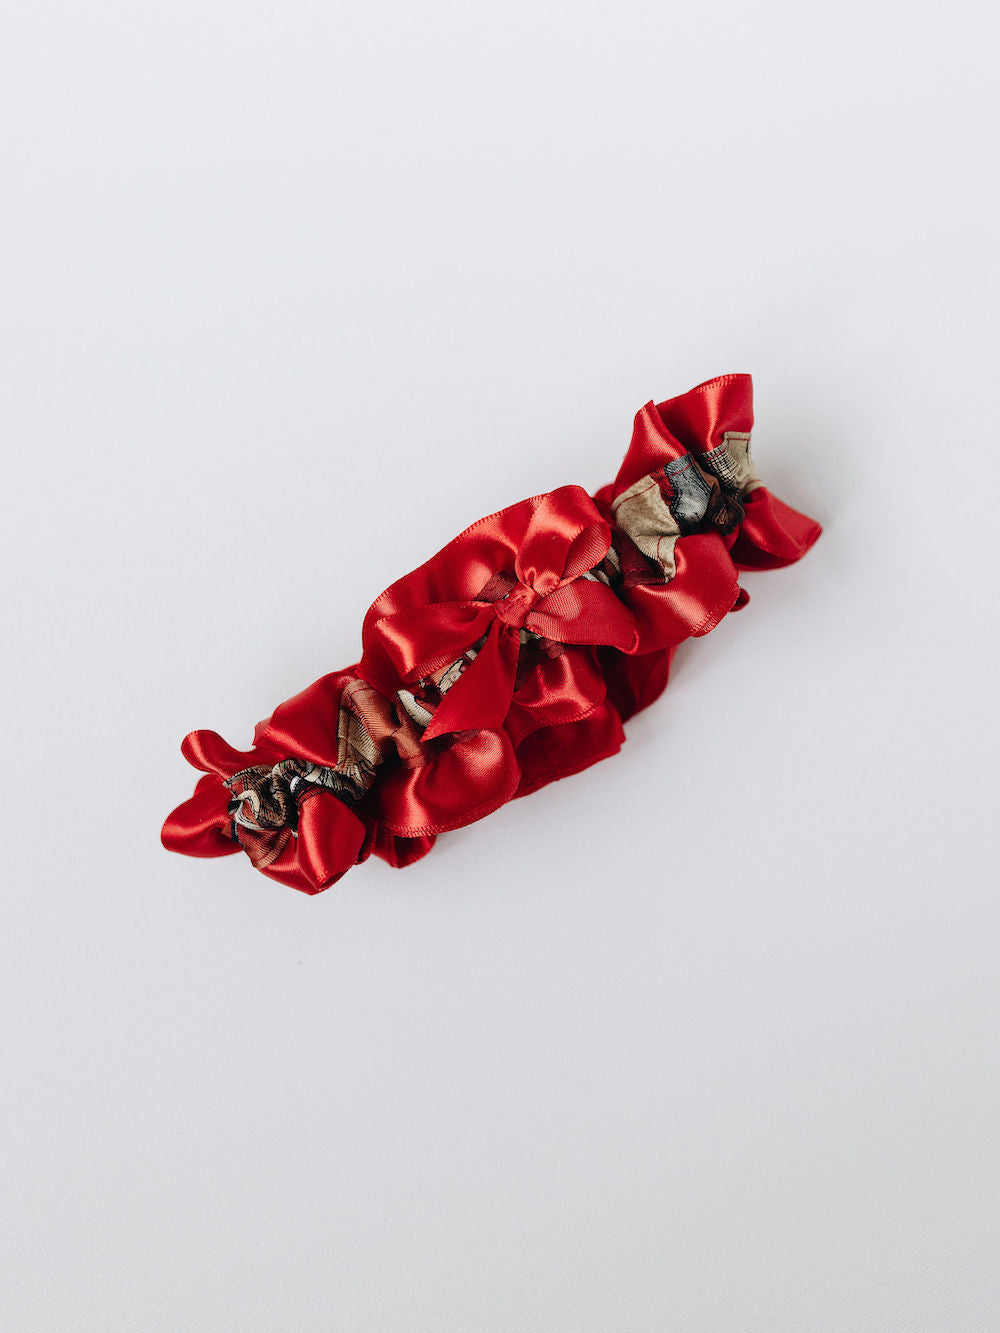 beautiful red satin main tossing garter from wedding garter set from dad's tie handmade by The Garter Girl